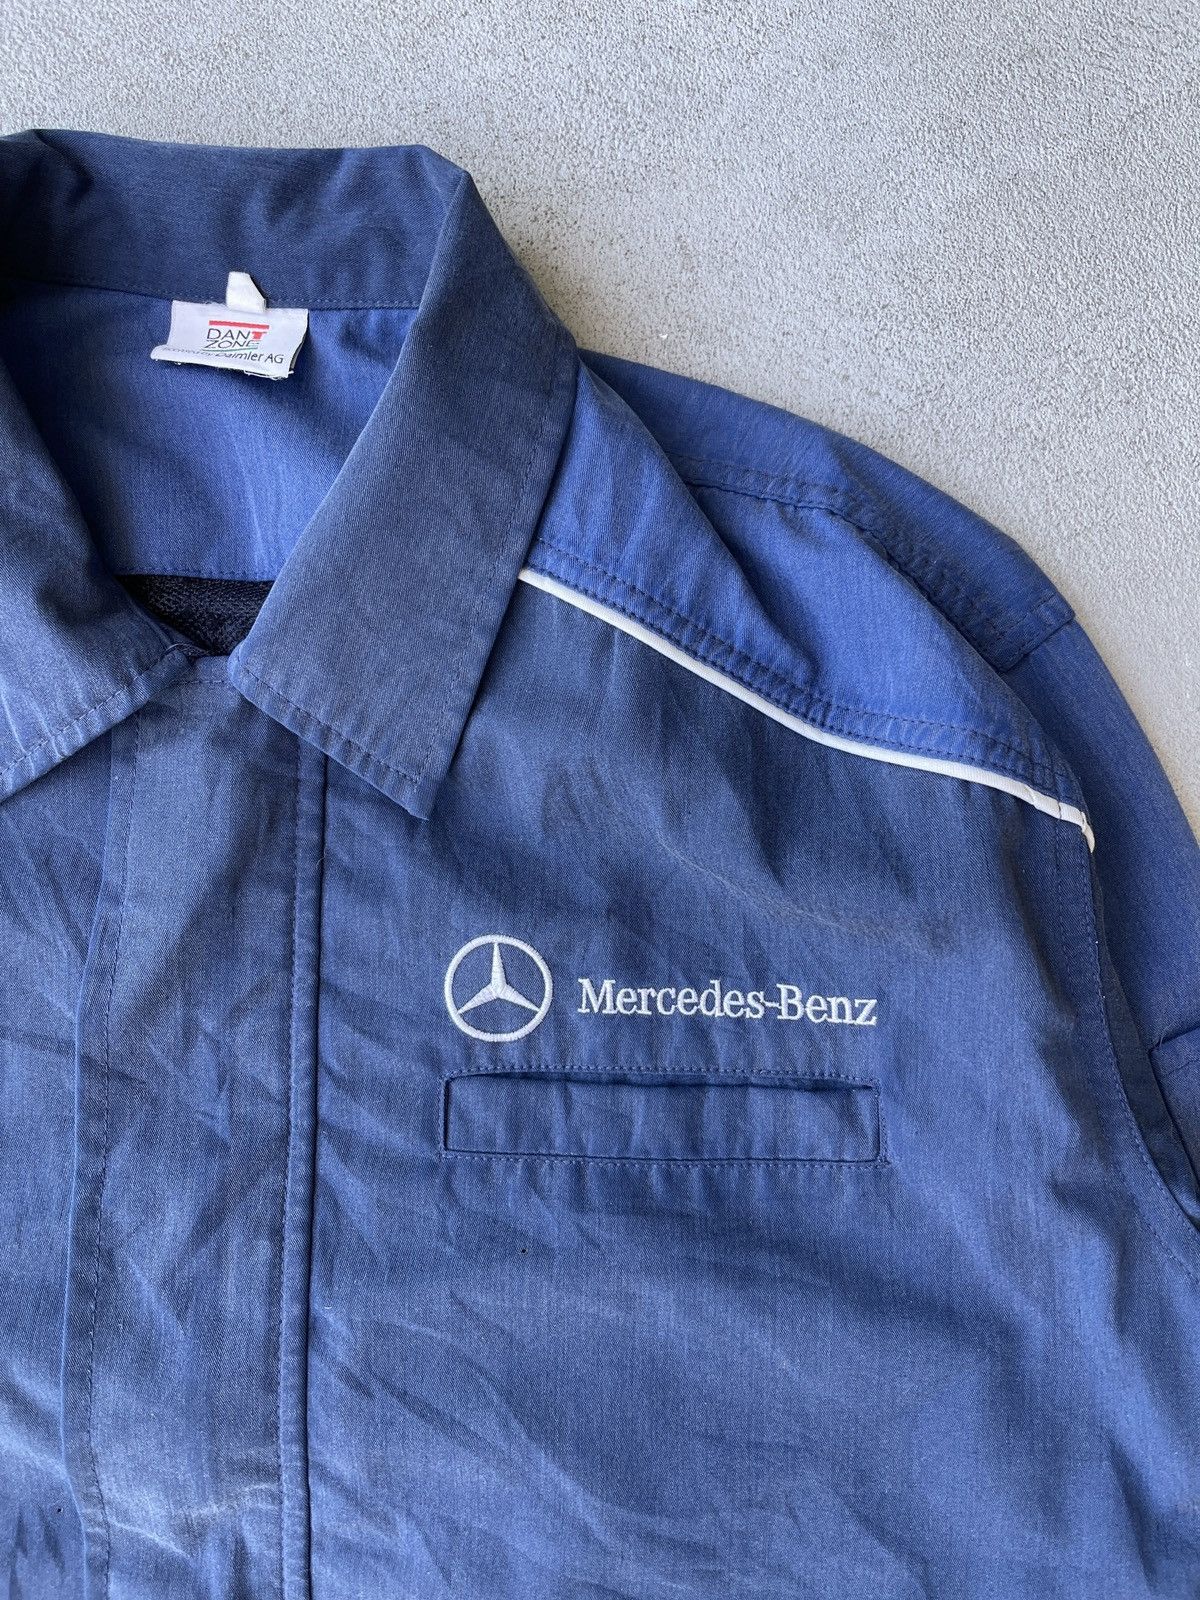 Vintage - RARE! 1990s Mercedes Benz Workwear Jacket (M) - 3